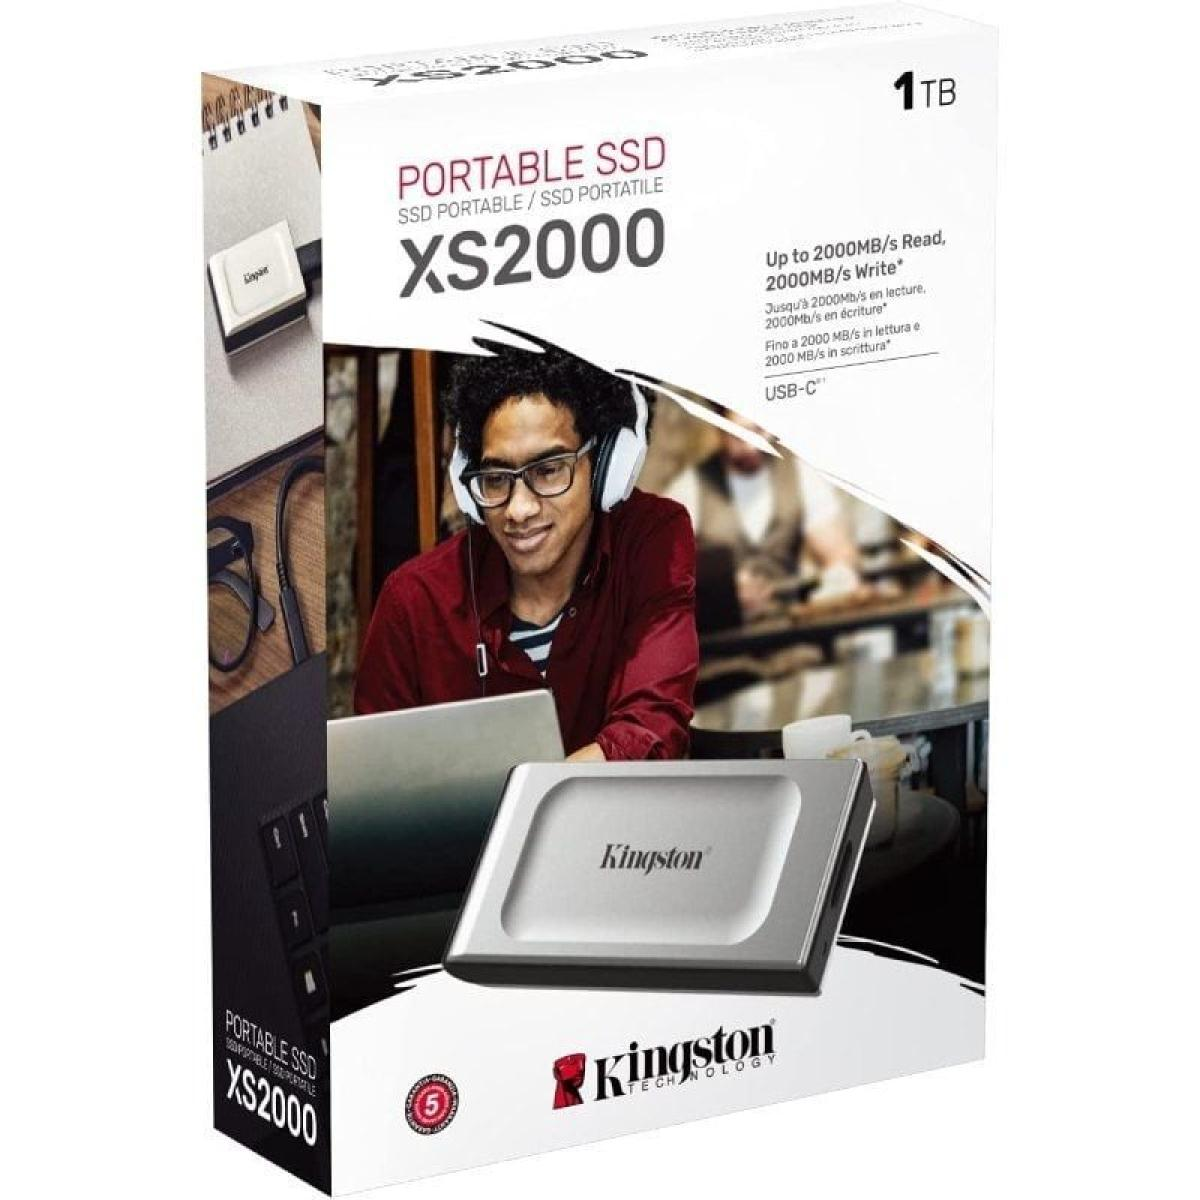 KINGSTON SXS2000/500G, 500 GB SSD, extern, Silber